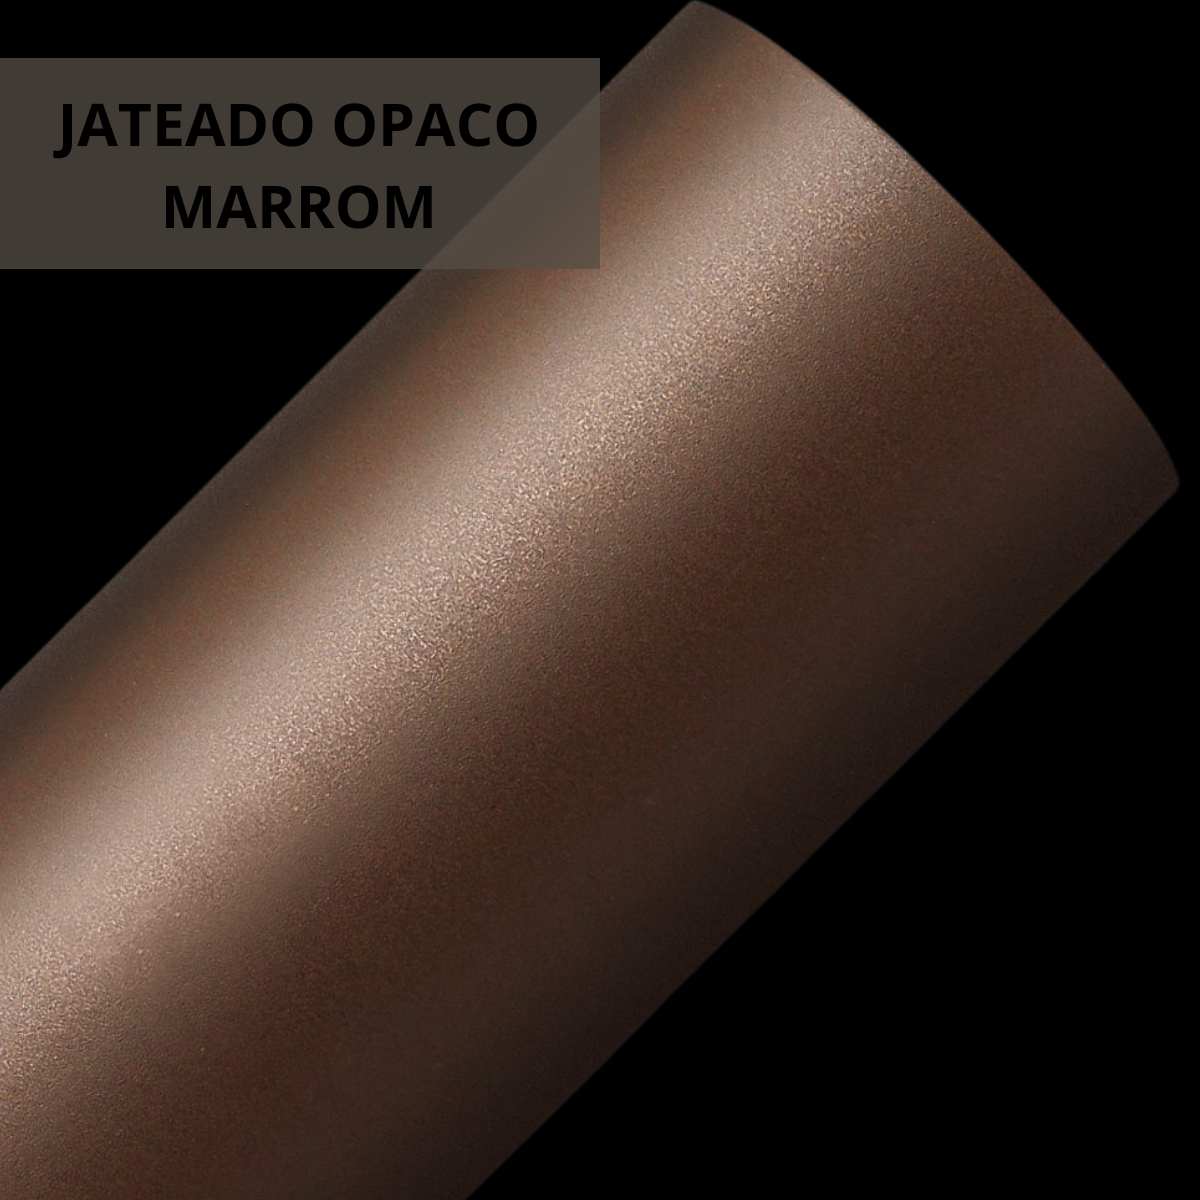 Adesivo Decorativo  Lavável - Jateado Opaco Marrom  - 1,38 de largura